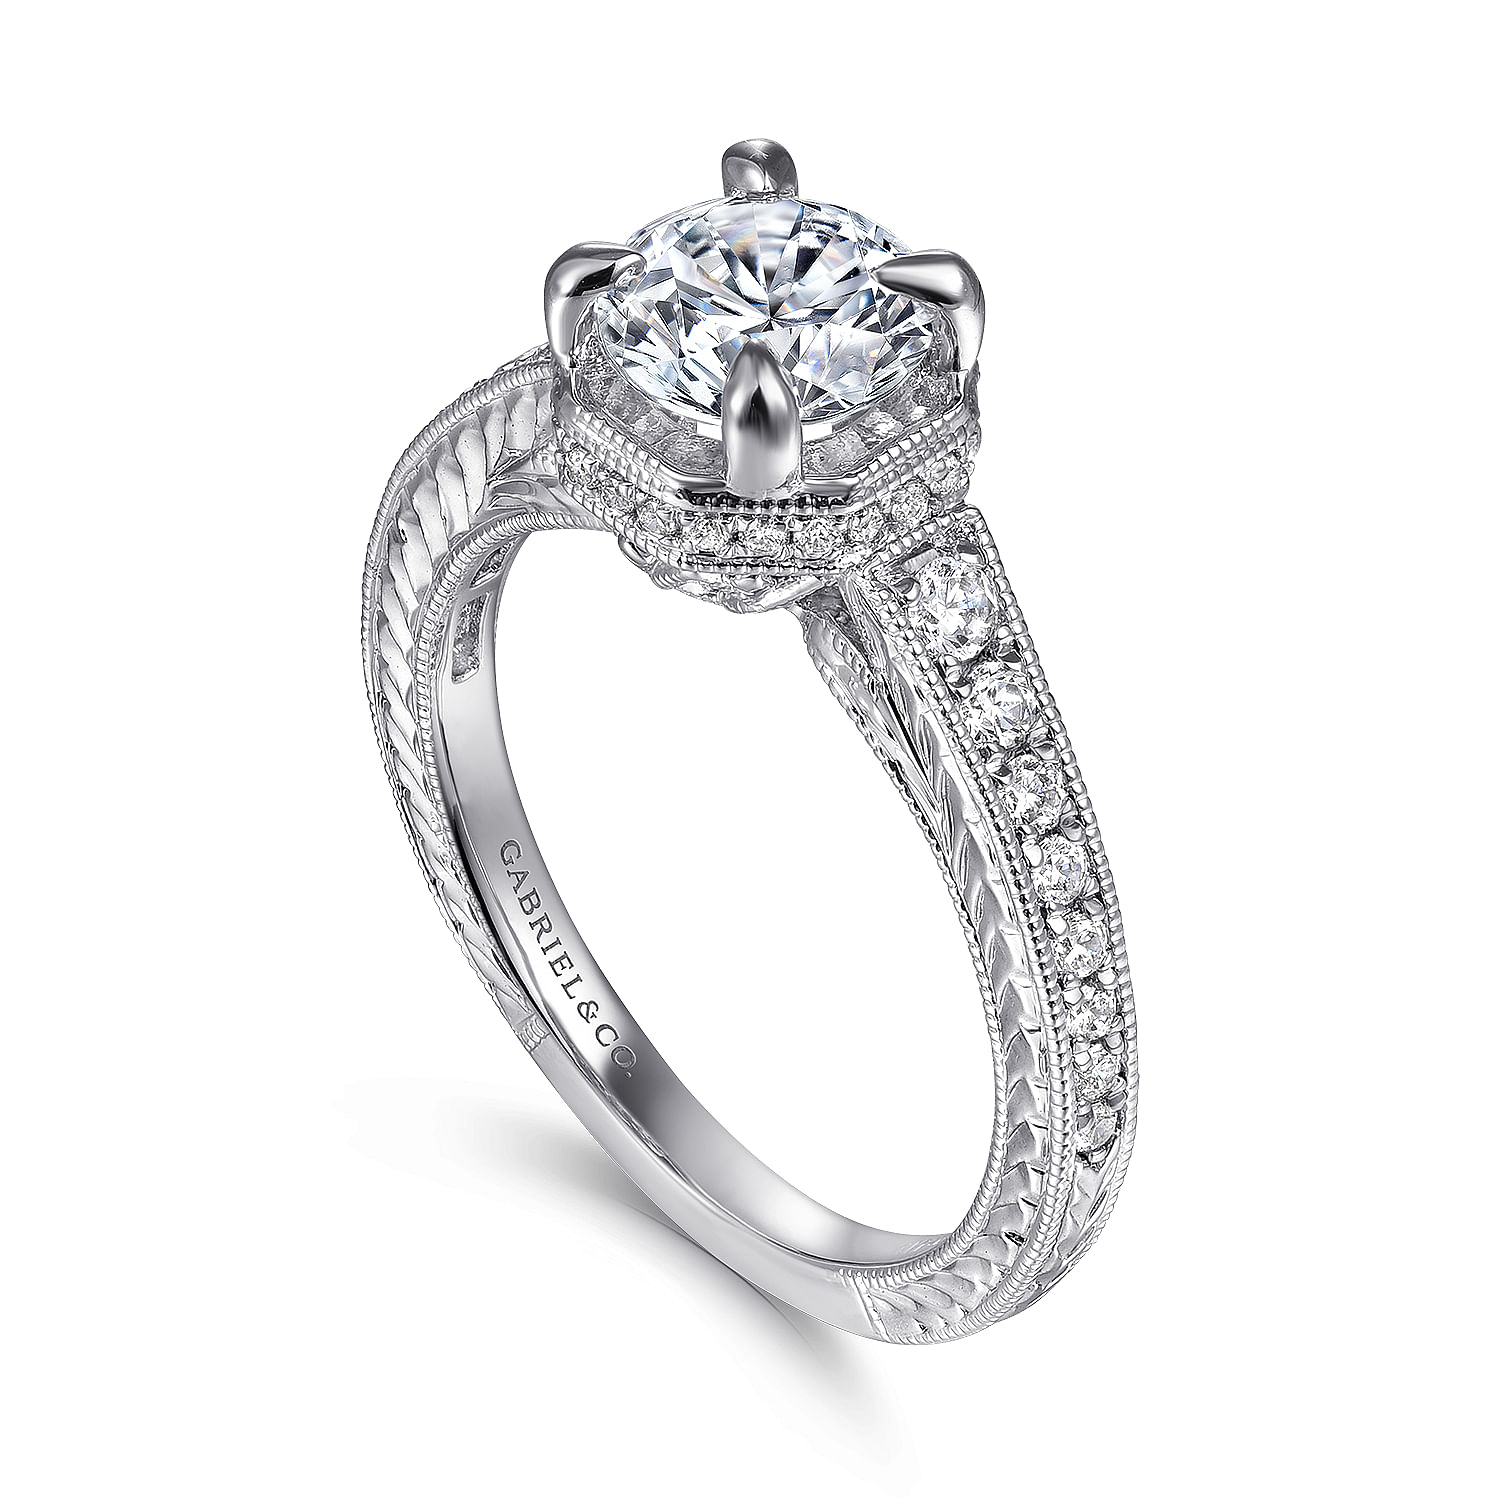 Vintage Inspired 14K White Gold Hidden Halo Round Diamond Engagement Ring